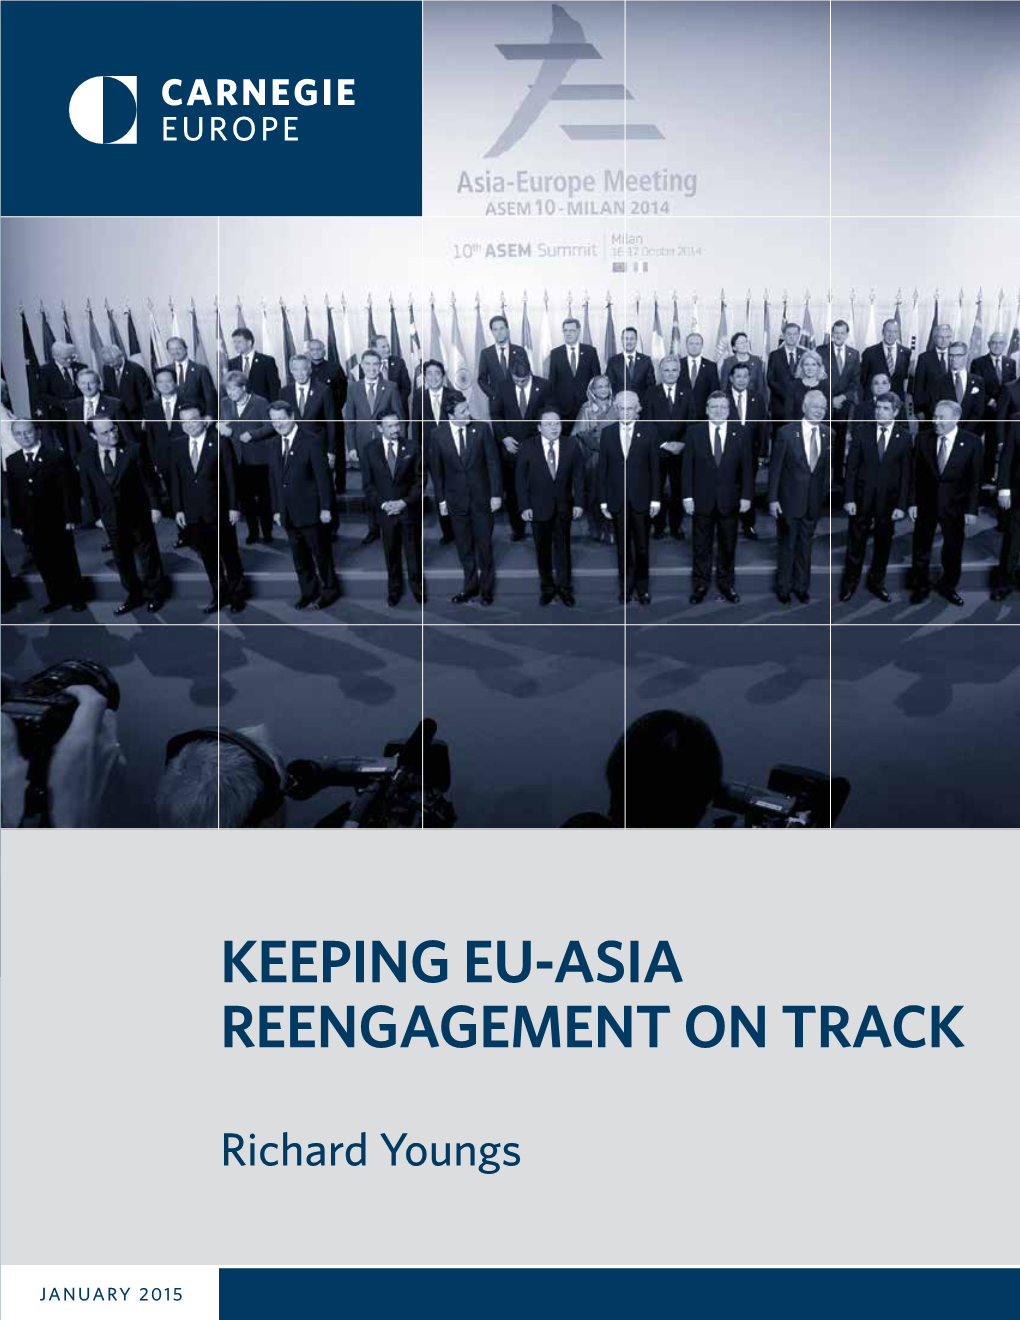 Keeping Eu-Asia Reengagement on Track